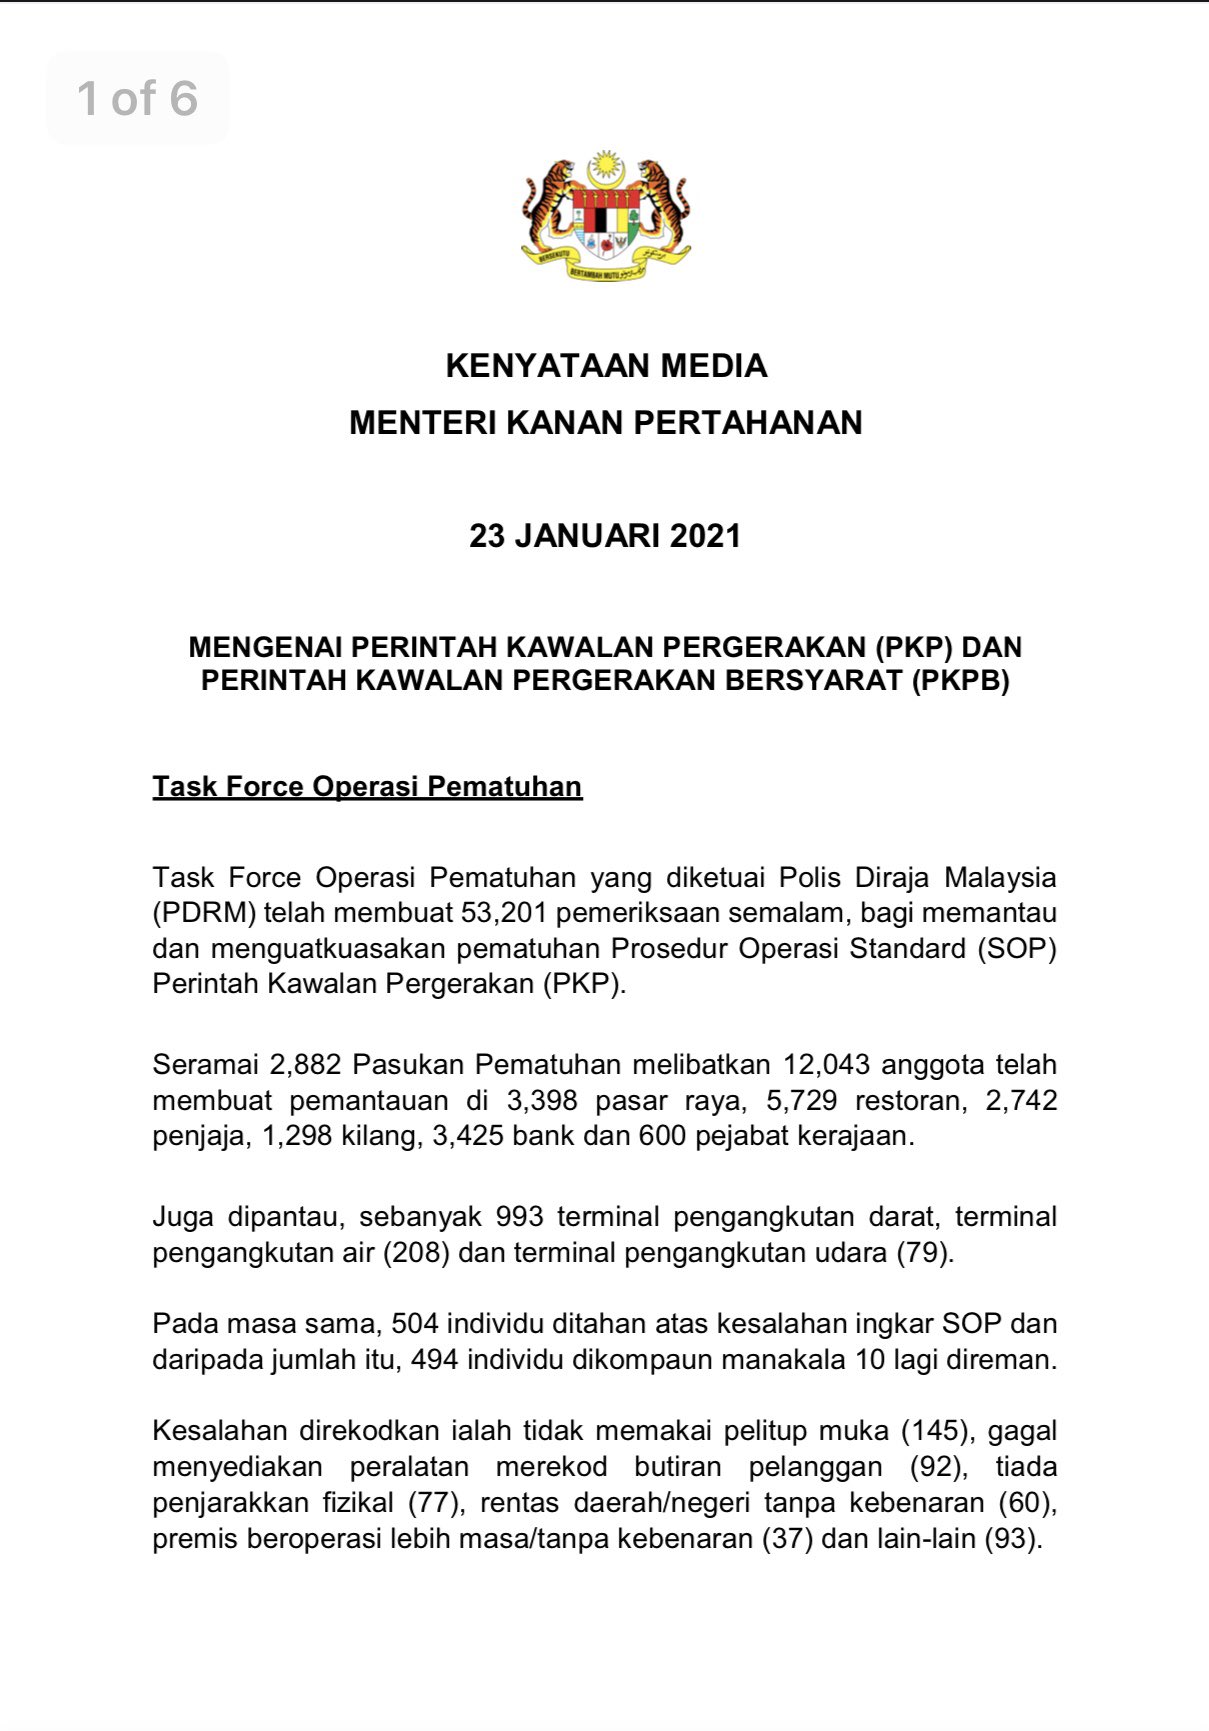 MINDEF Malaysia on Twitter: "Penamatan PKPD Pusat Koreksional Johor